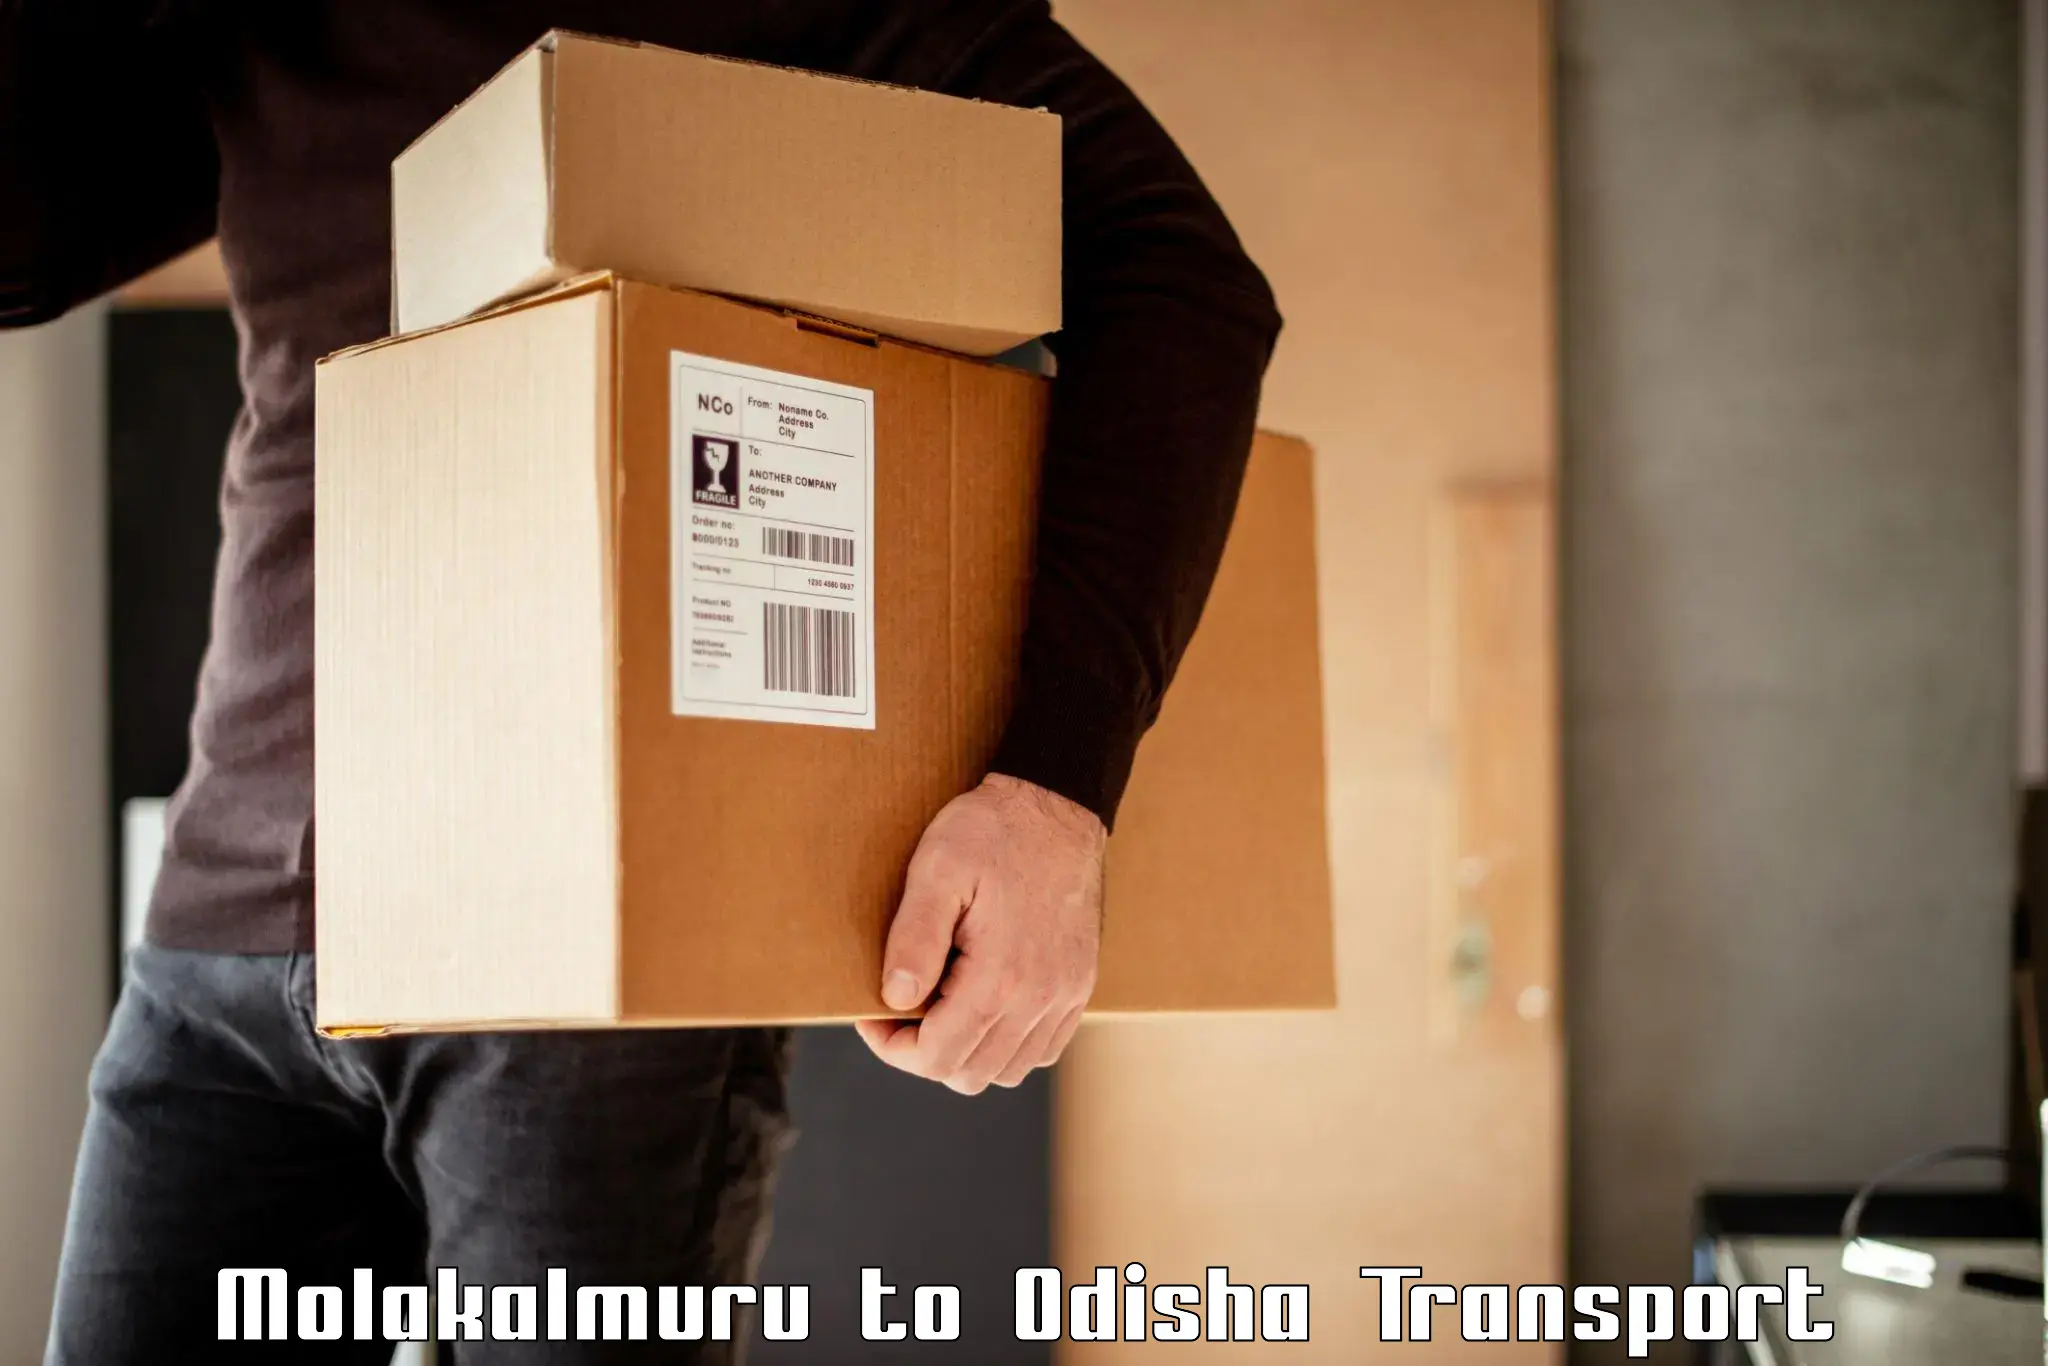 Shipping partner Molakalmuru to Odisha